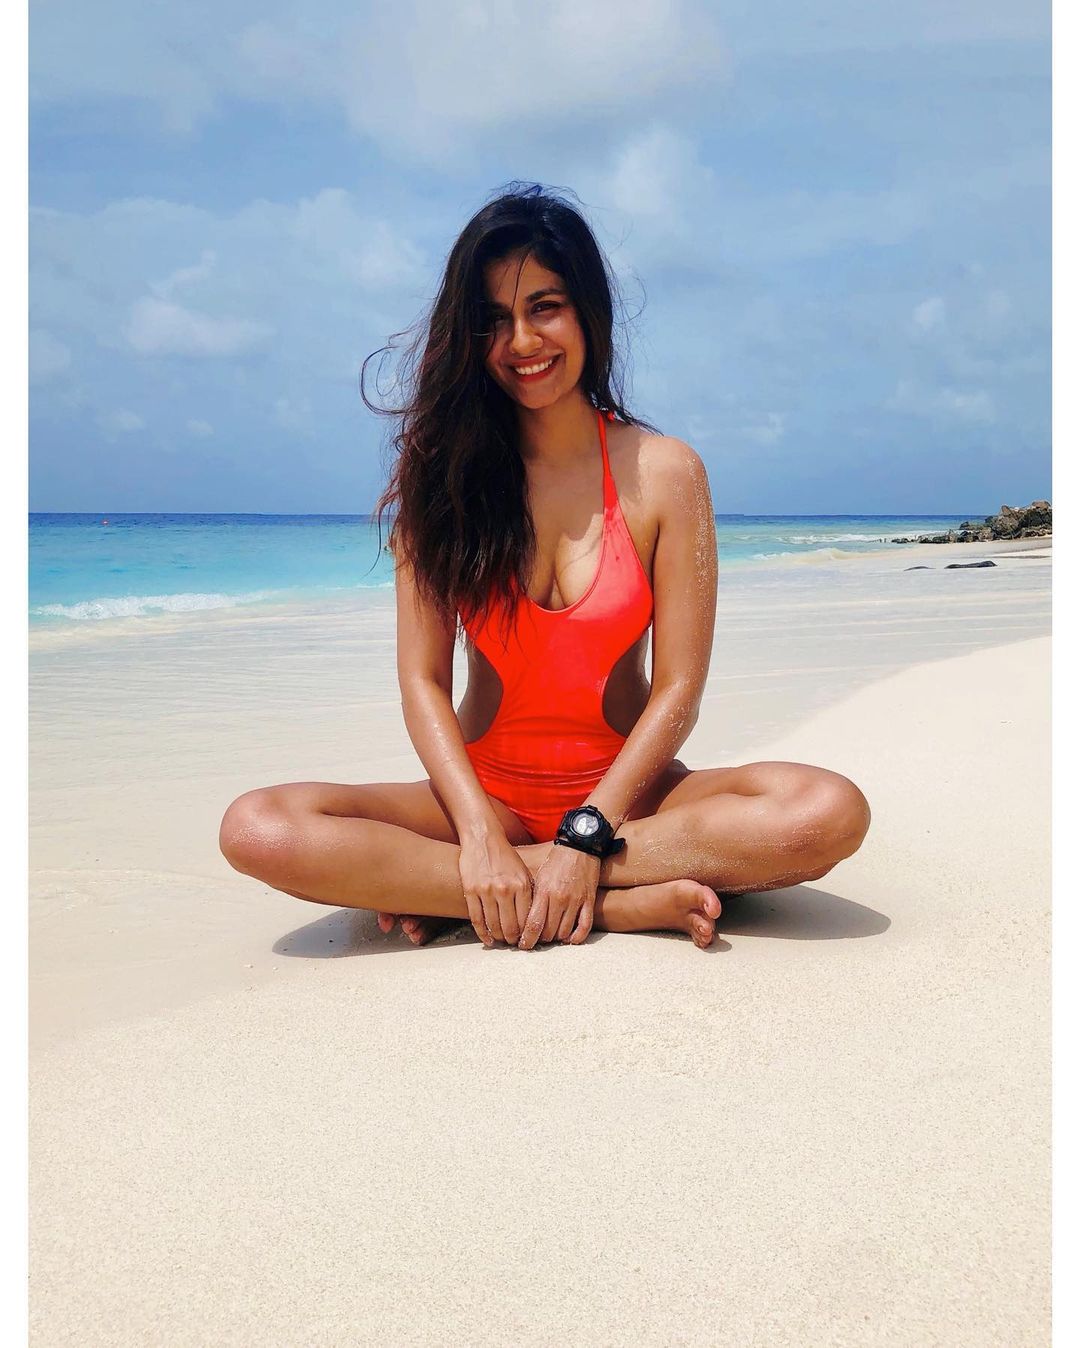 Shreya Dhanwanthary looks pretty as she poses on the white beach